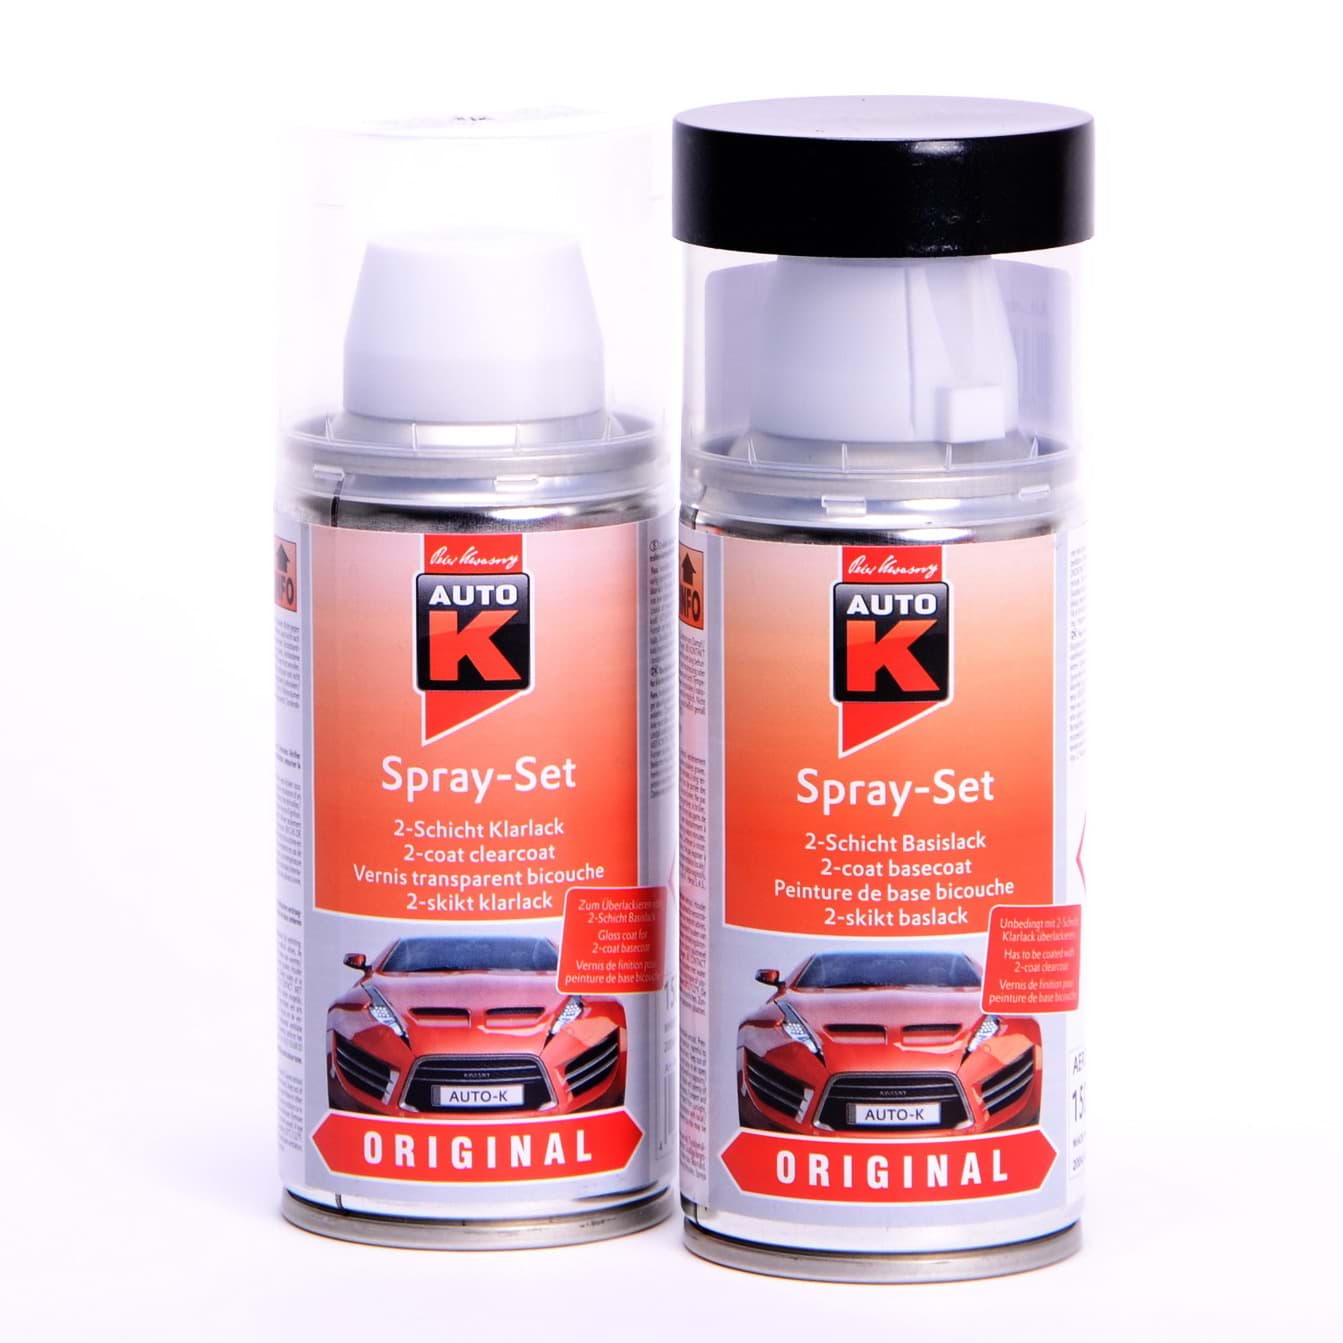 Auto-K Spray-Set Autolack für Opel 484 Apache met 21397 resmi